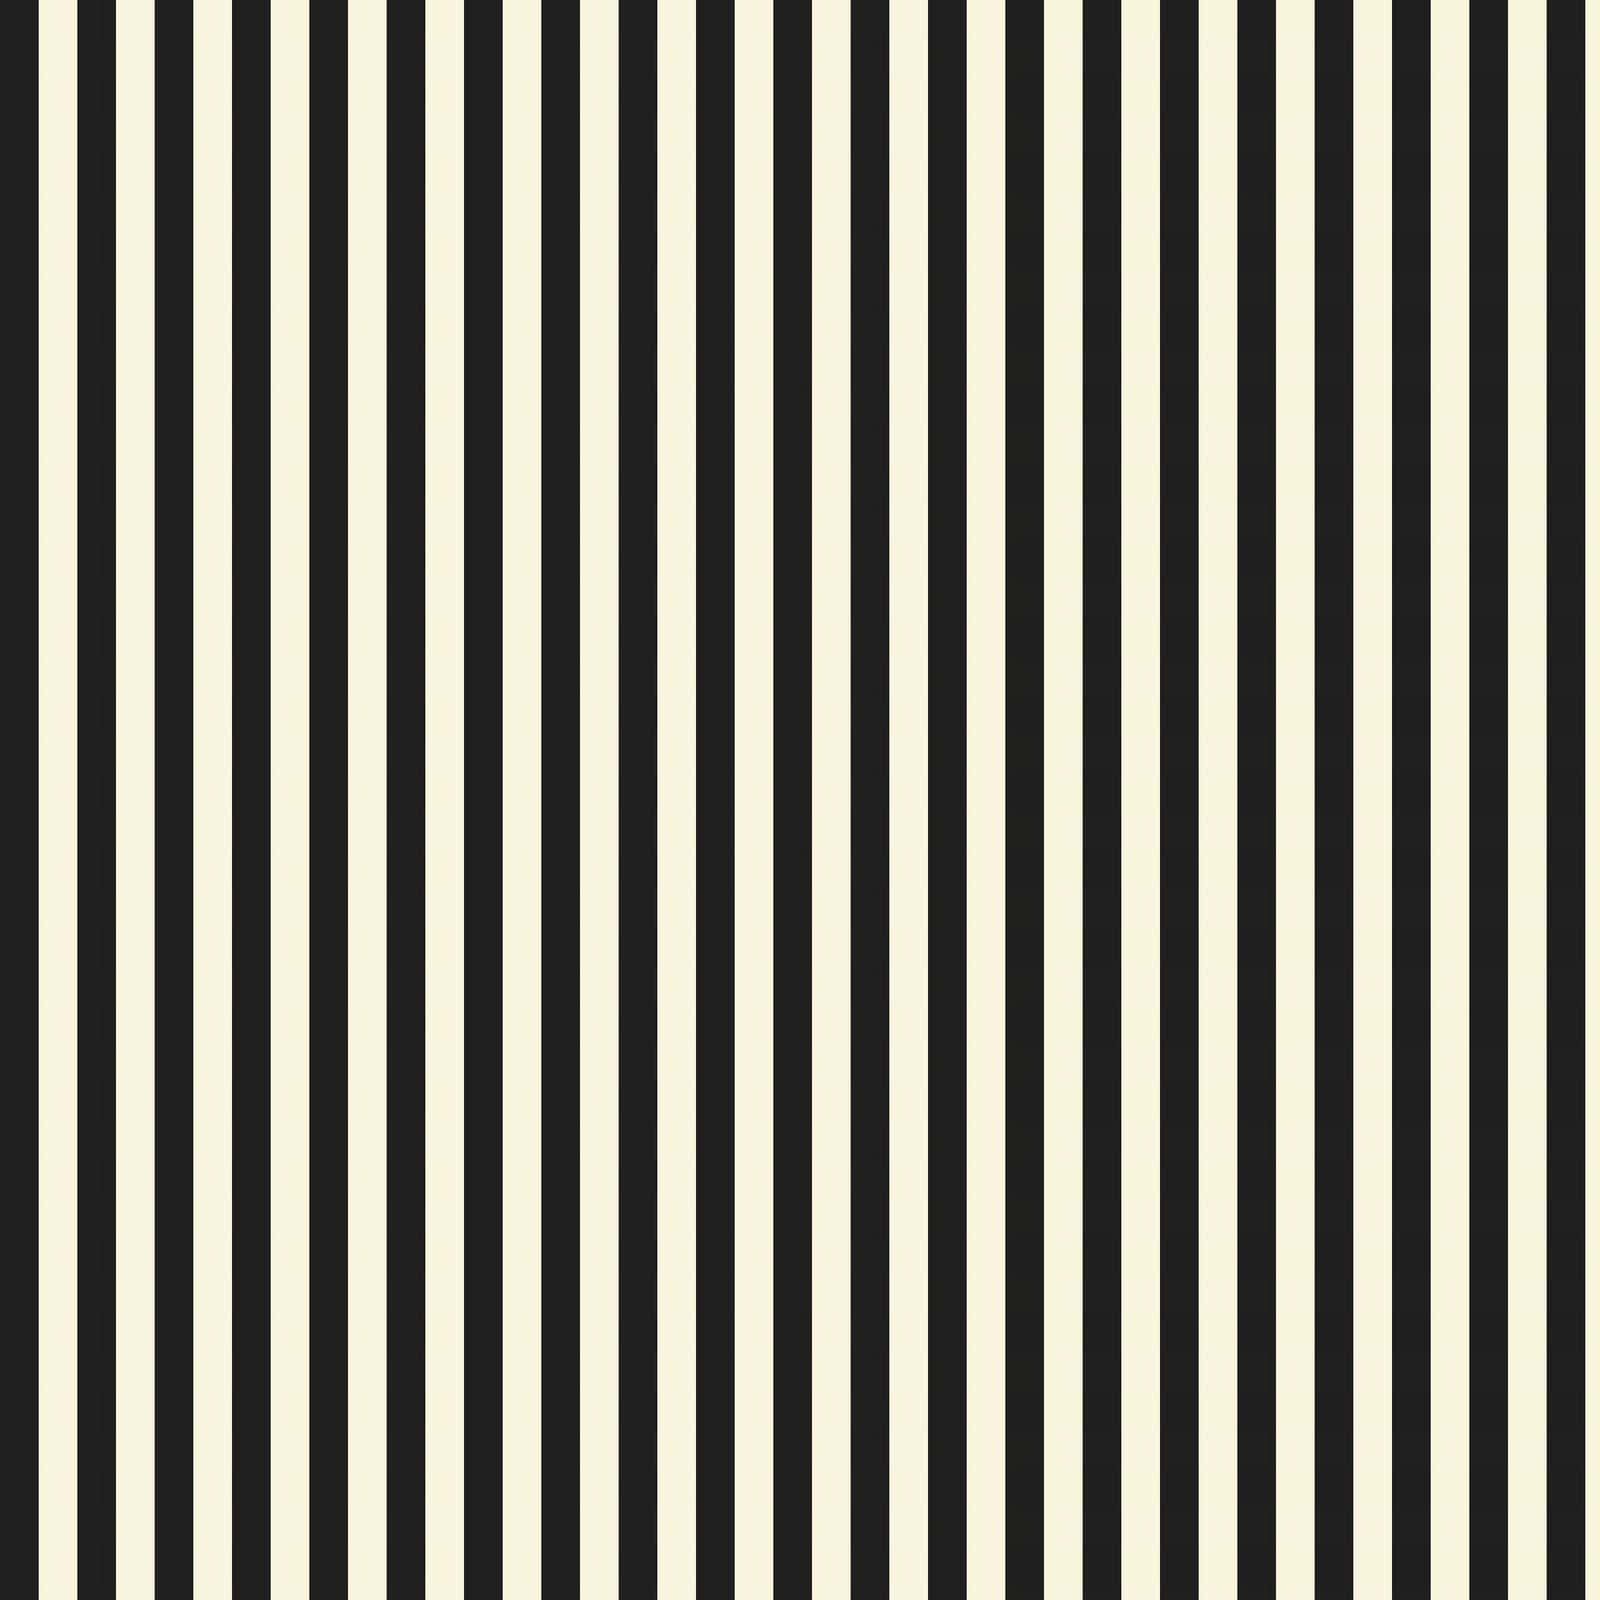 Striking Black And White Stripes Background